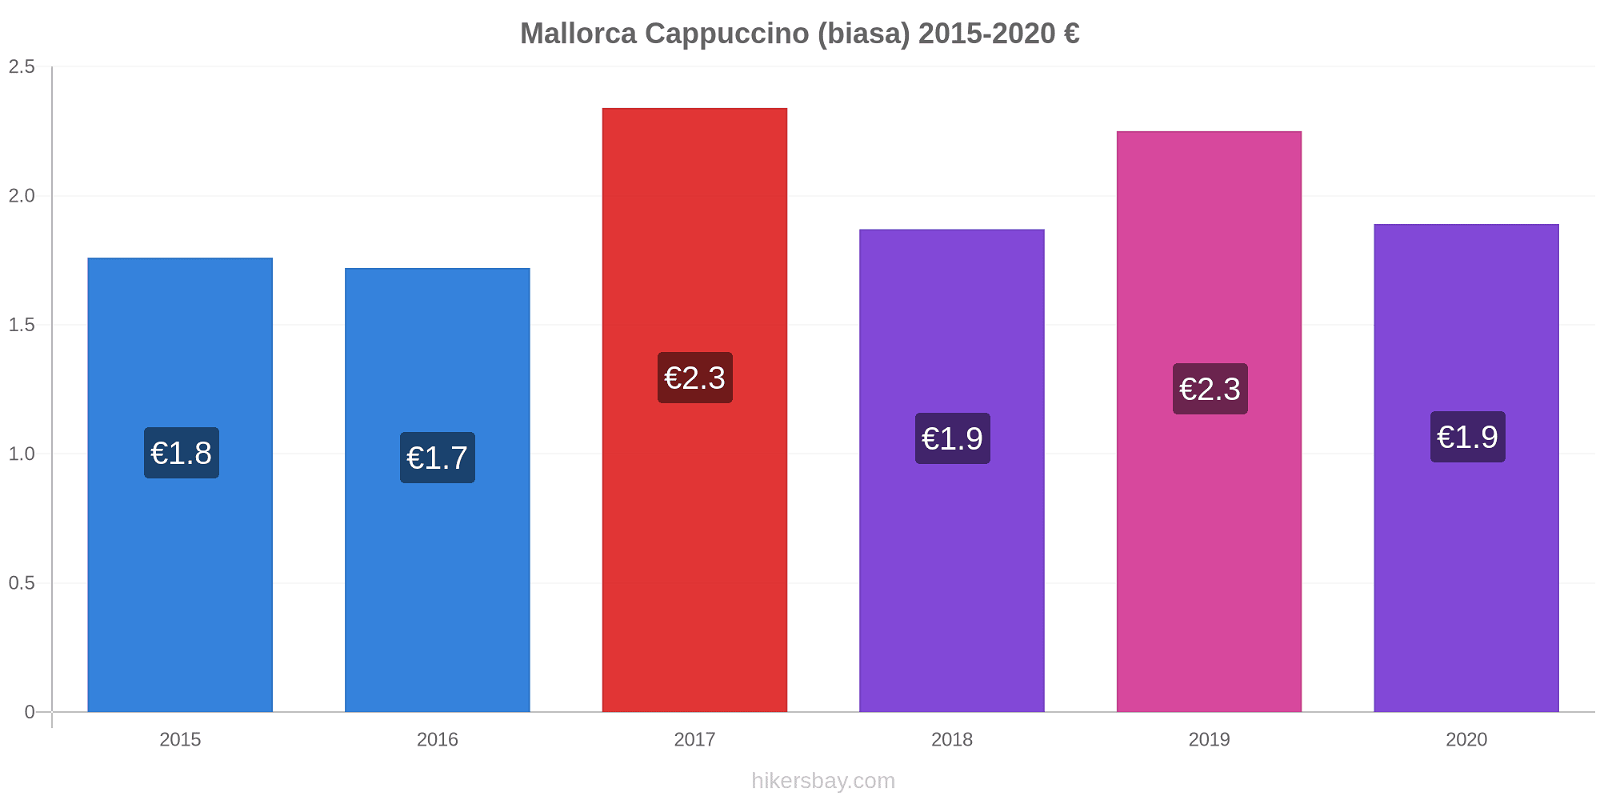 Mallorca perubahan harga Cappuccino (biasa) hikersbay.com